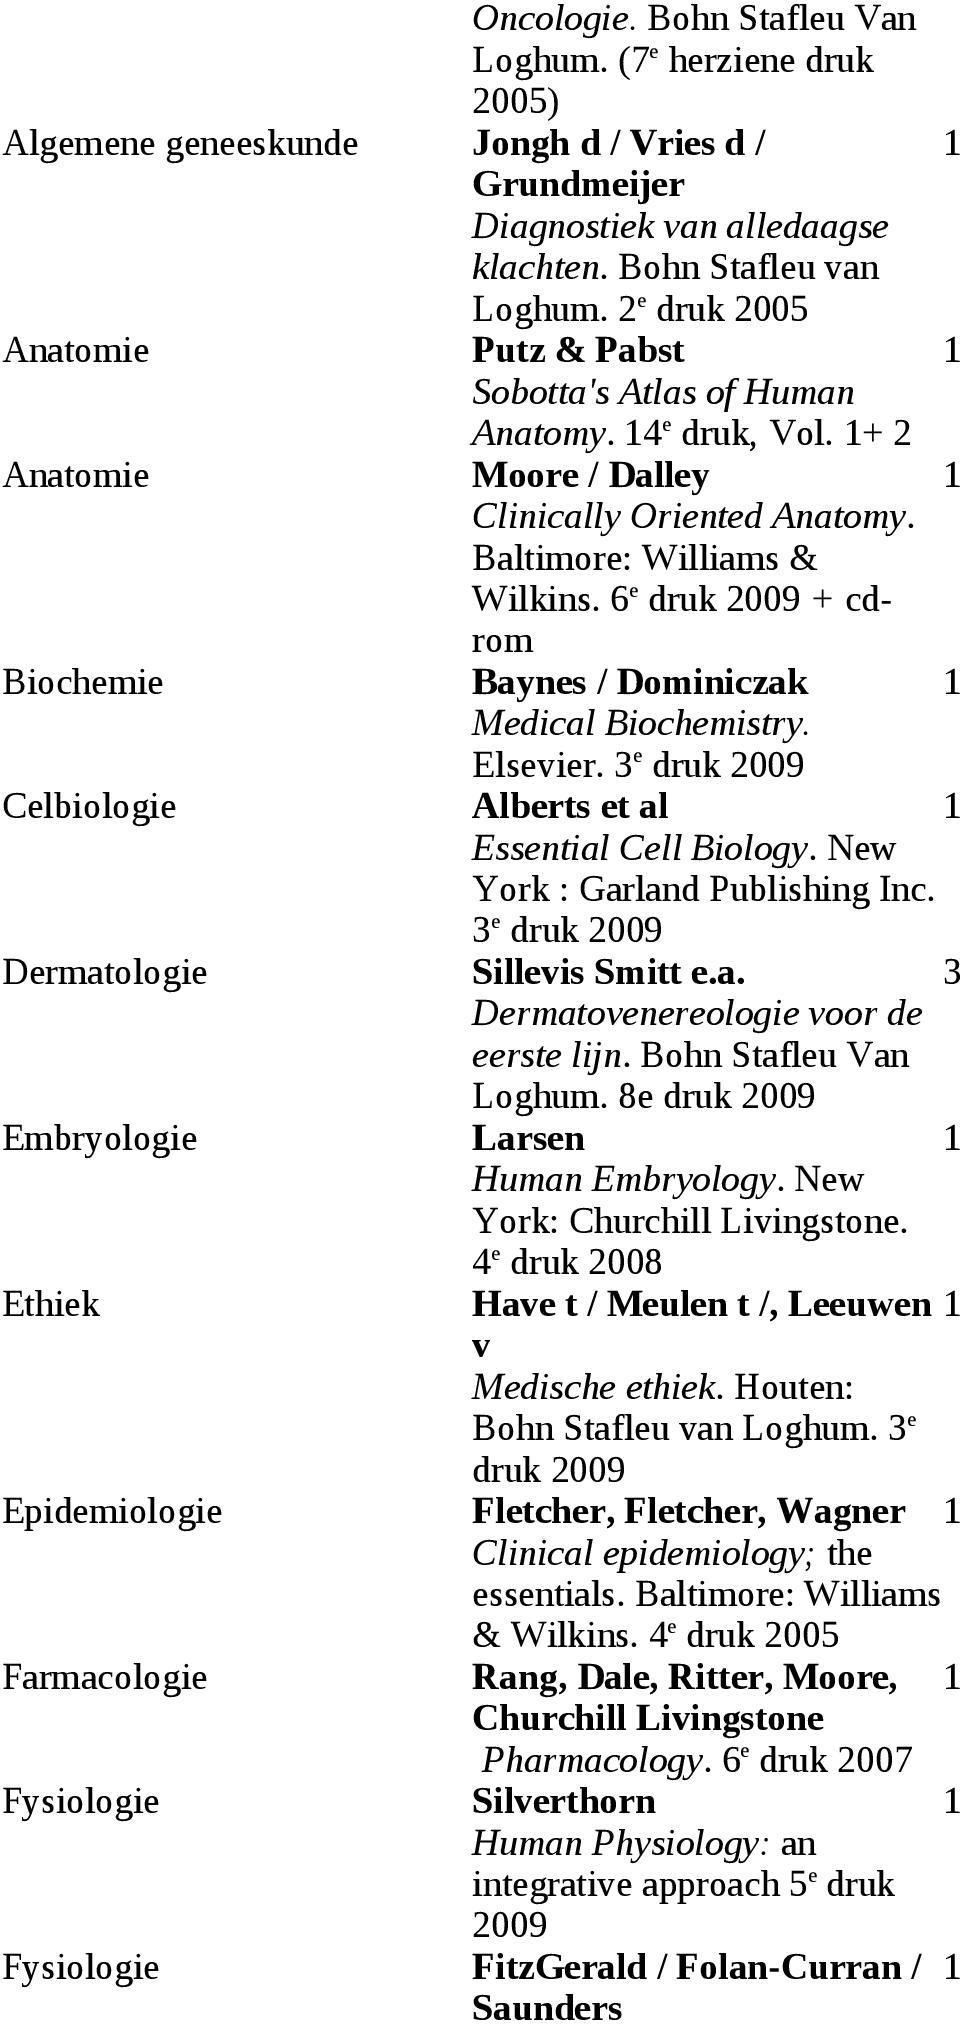 6 e druk 2009 + cdrom Biochemie Baynes / Dominiczak 1 Medical Biochemistry. Elsevier. 3 e druk 2009 Celbiologie Alberts et al 1 Essential Cell Biology. New York : Garland Publishing Inc.